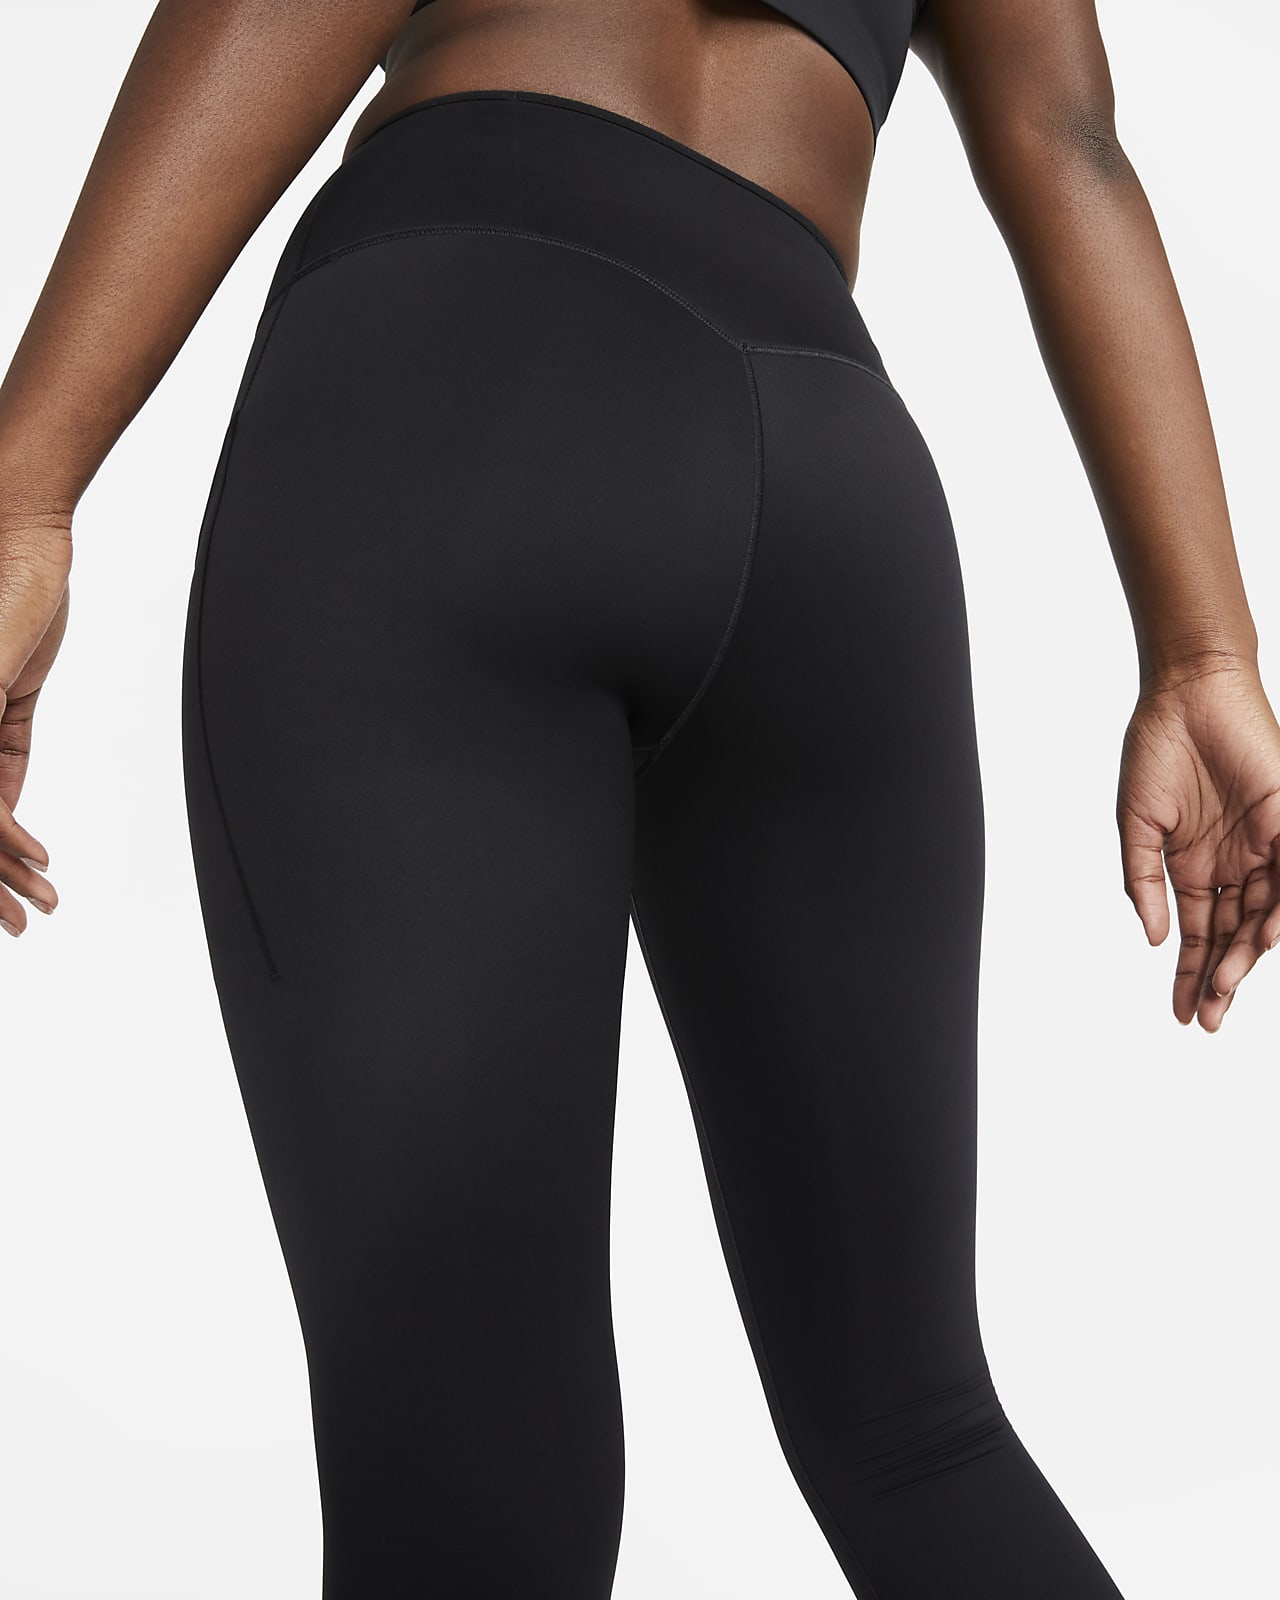 Nike Pants Women Small Gray Fitory Capri Leggings - Depop